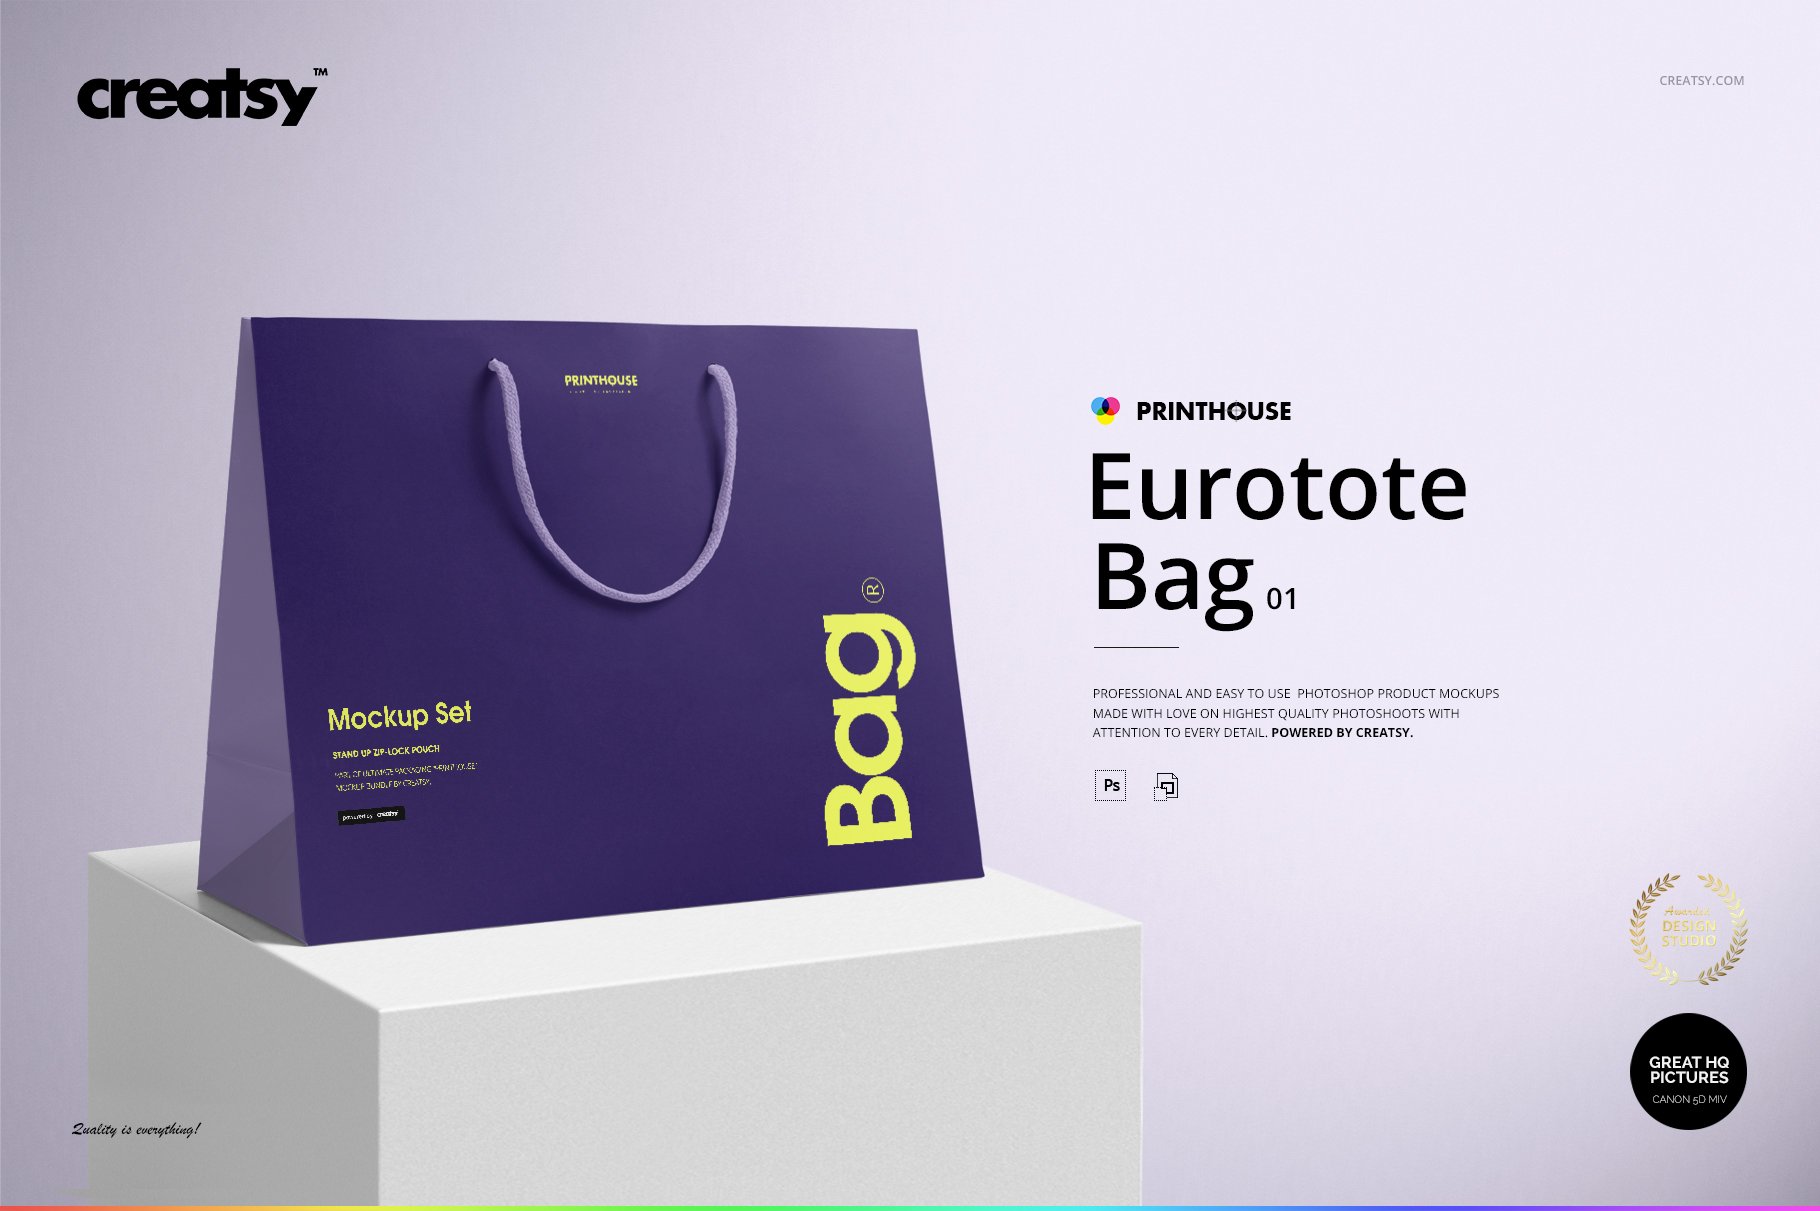 Eurotote Bag 1 Mockup Set cover image.